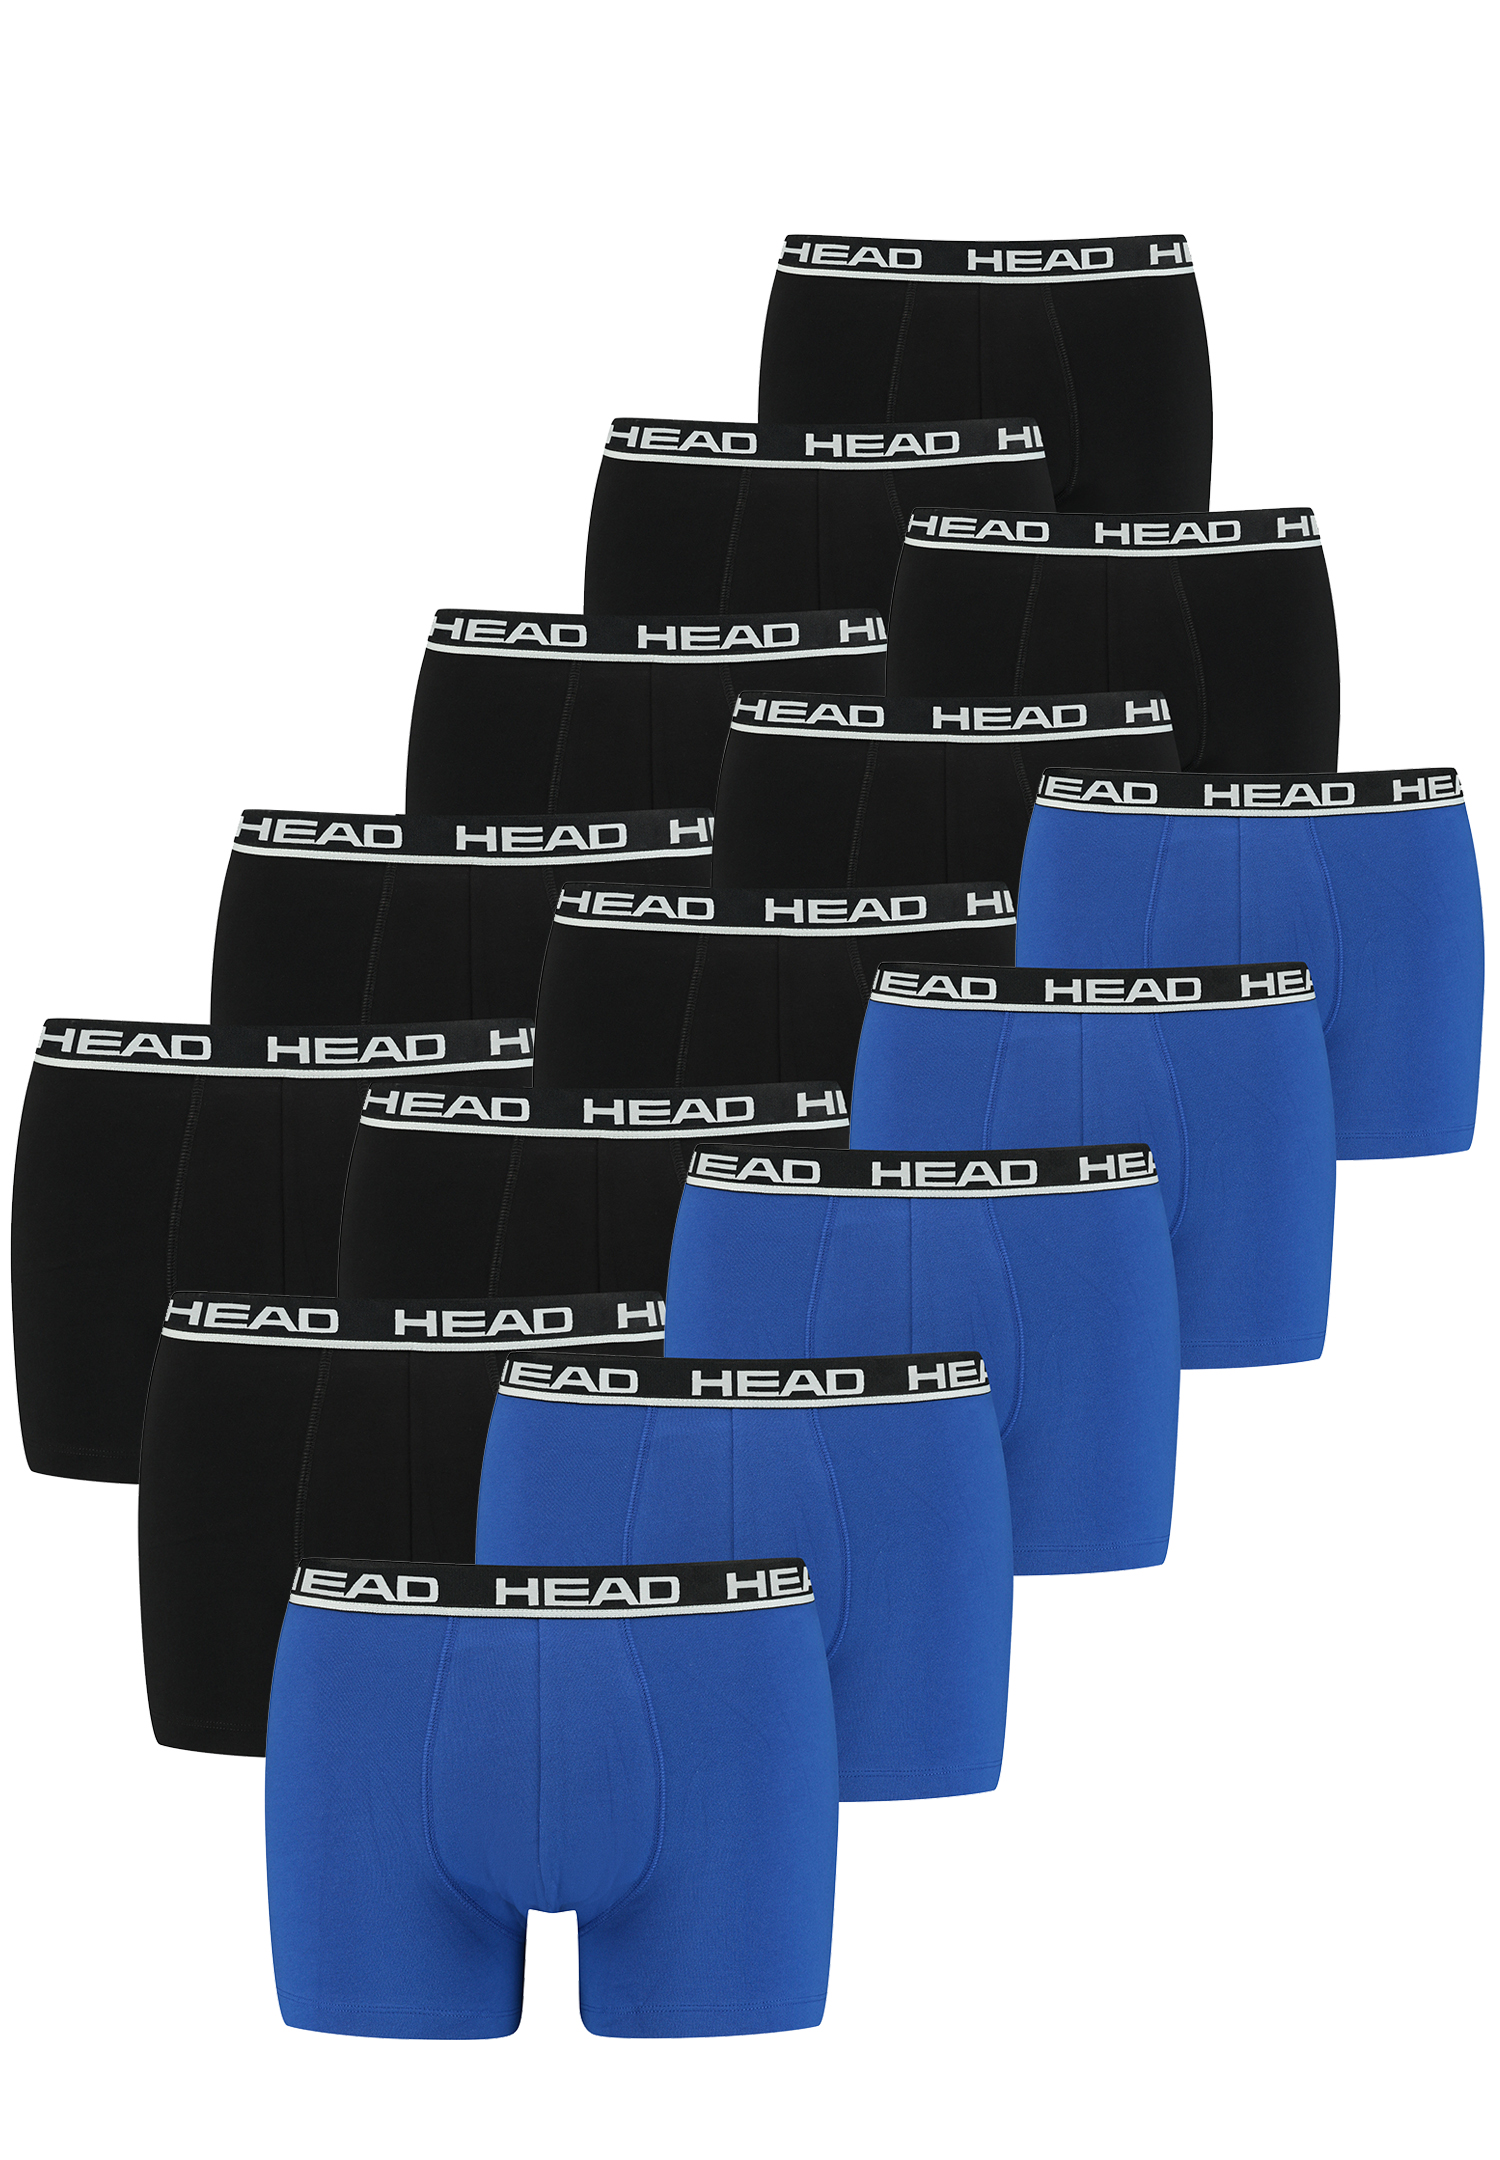 Боксеры HEAD Boxershorts 15 шт, цвет 021 - blue / black цена и фото